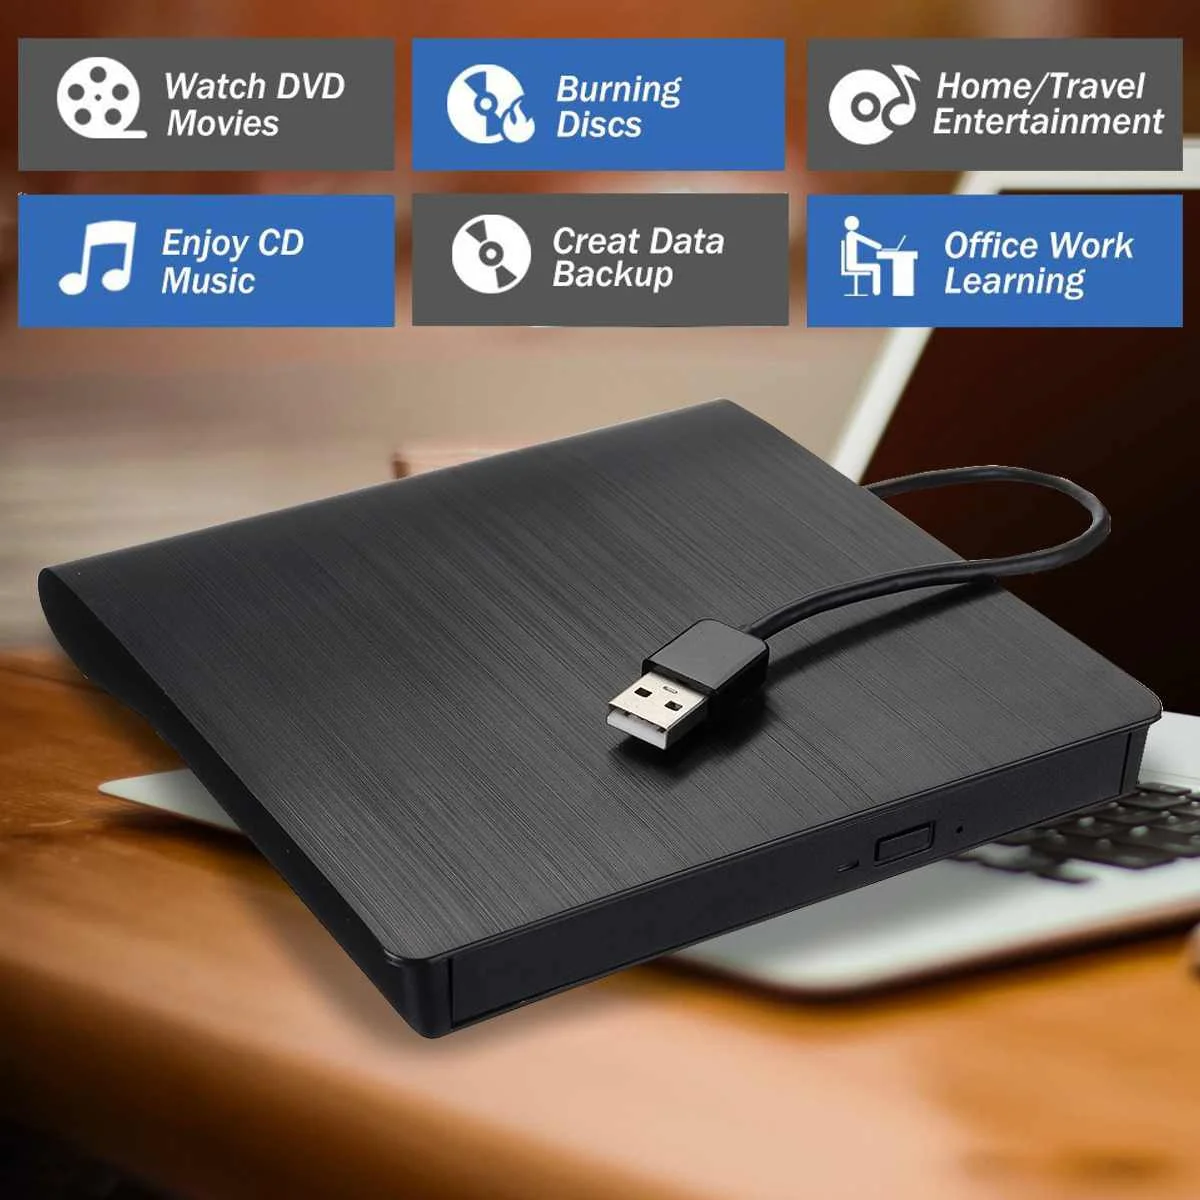 USB 3.0 Slim External DVD RW CD Writer Drive Burner Reader Player Optical Drives For Laptop PC Business Office